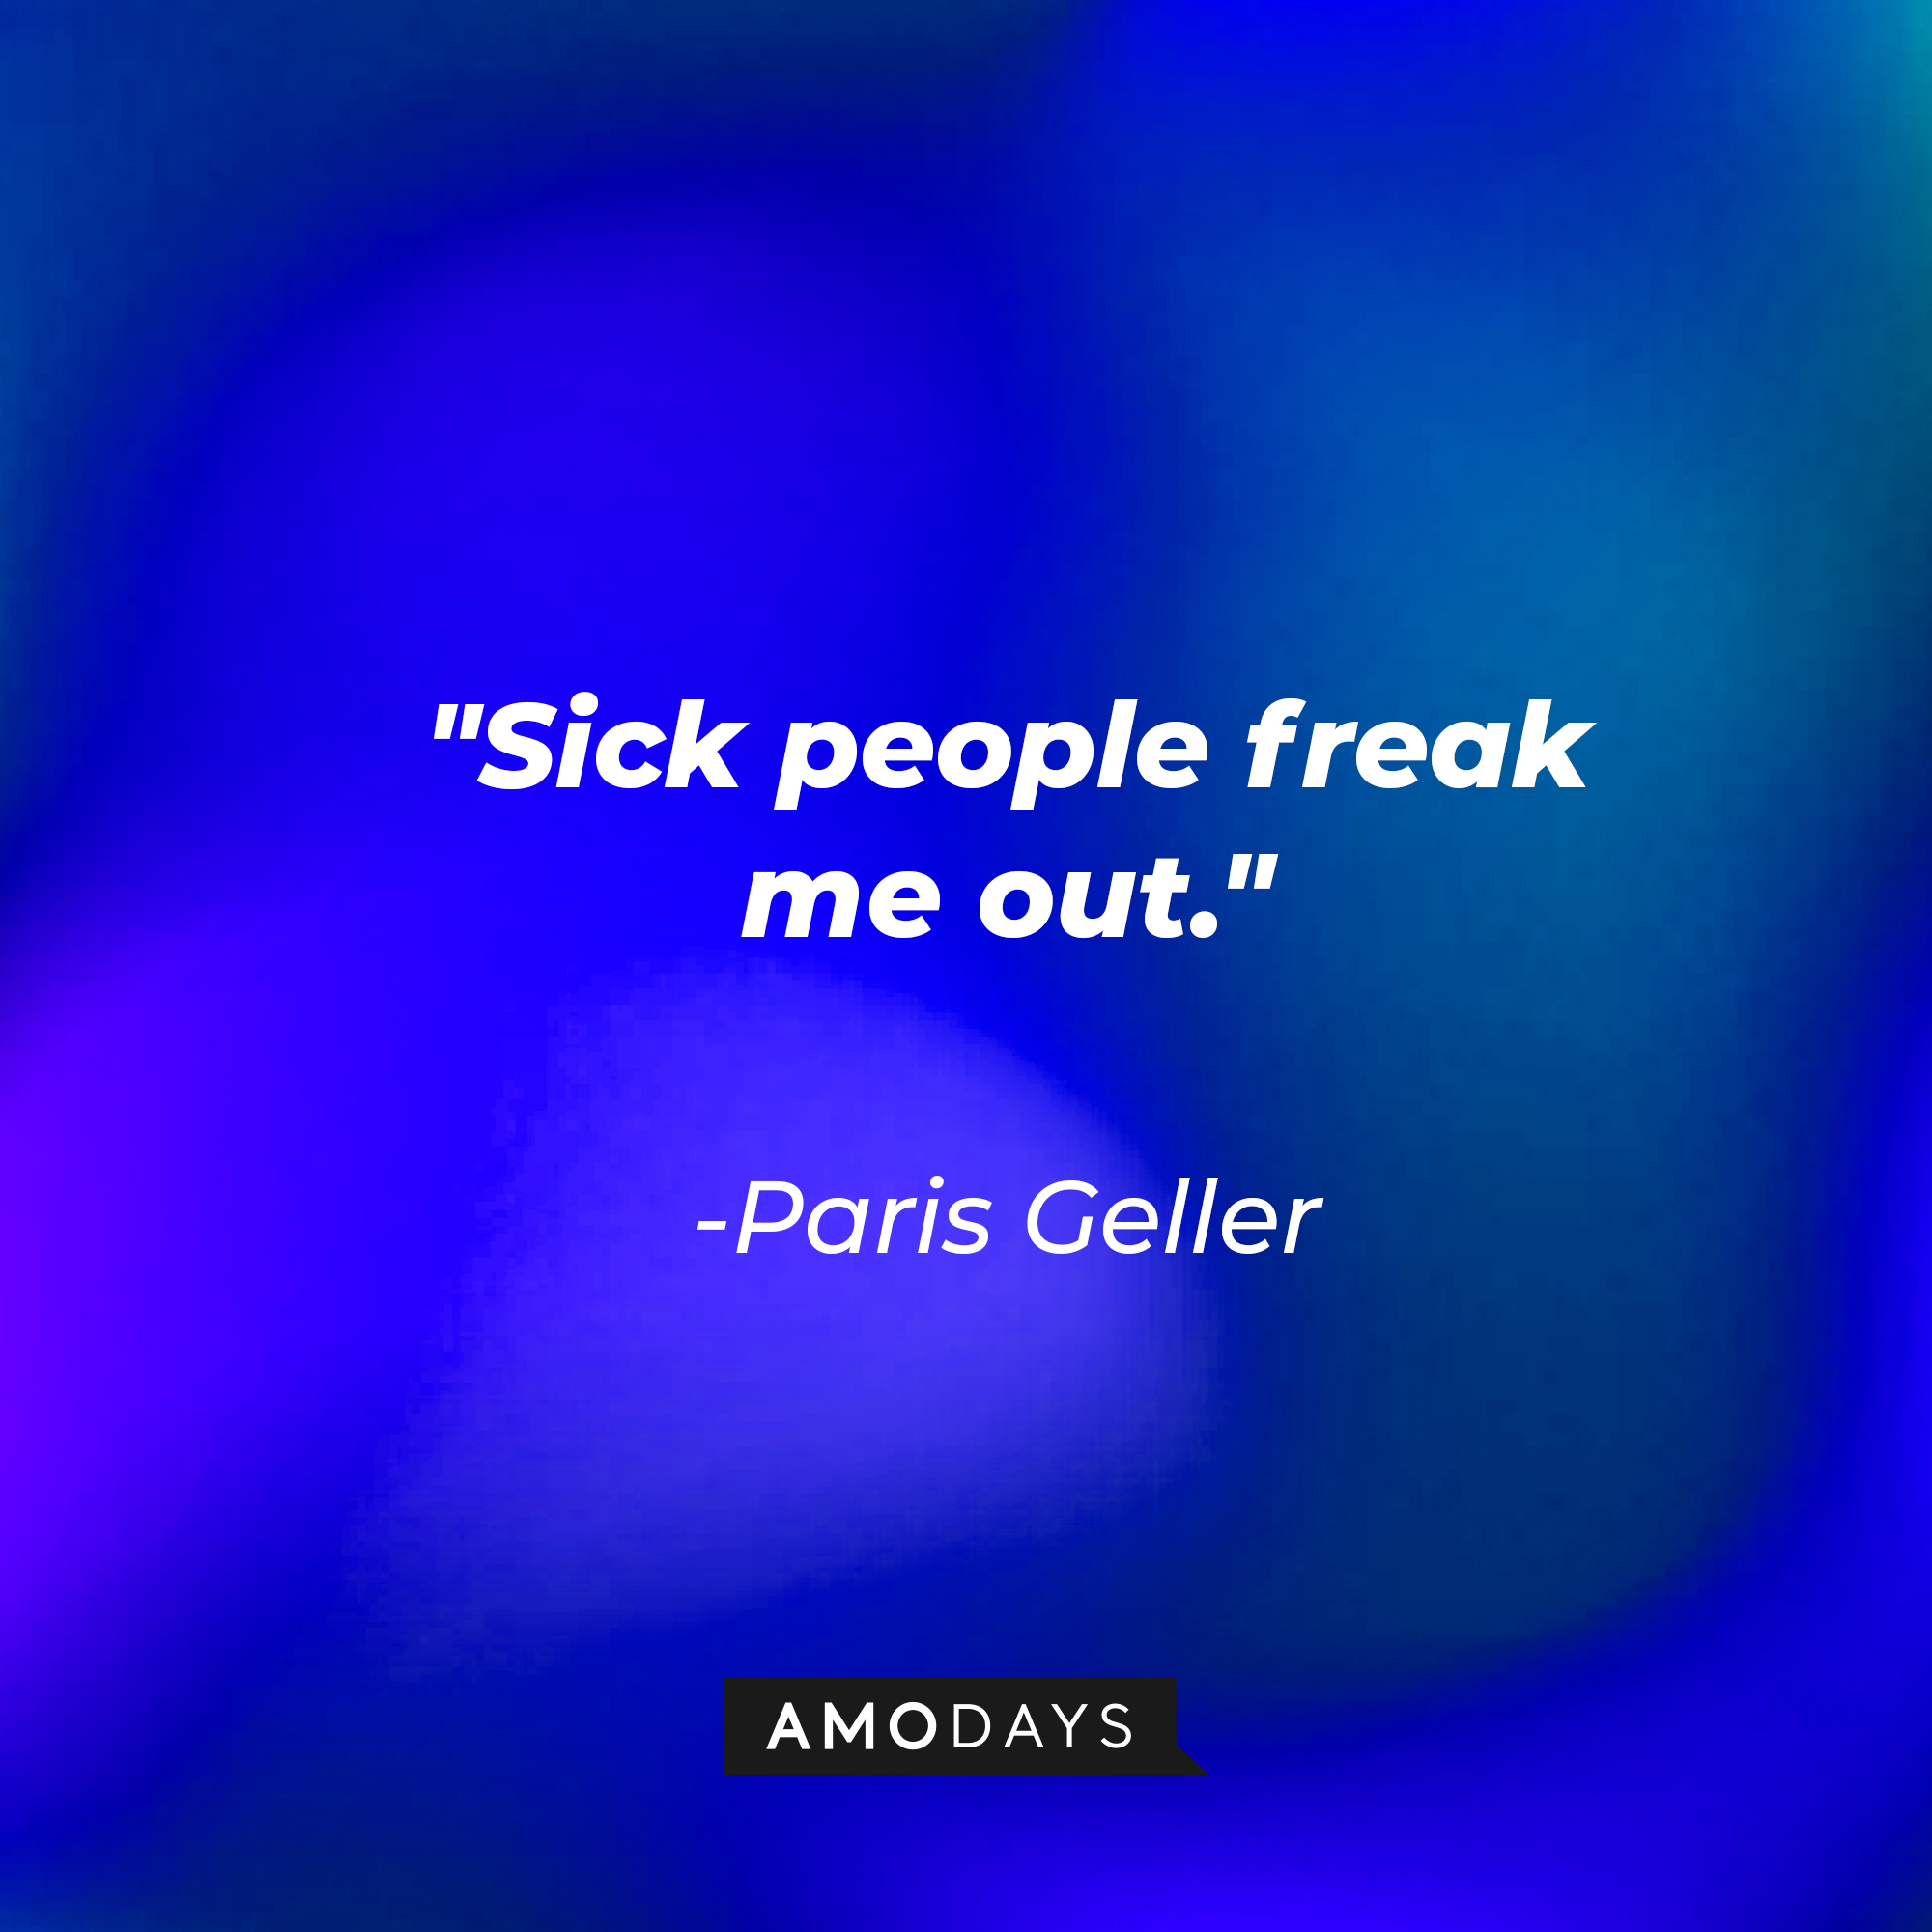 Paris Geller’s quote: “Sick people freak me out.” | Source: AmoDays